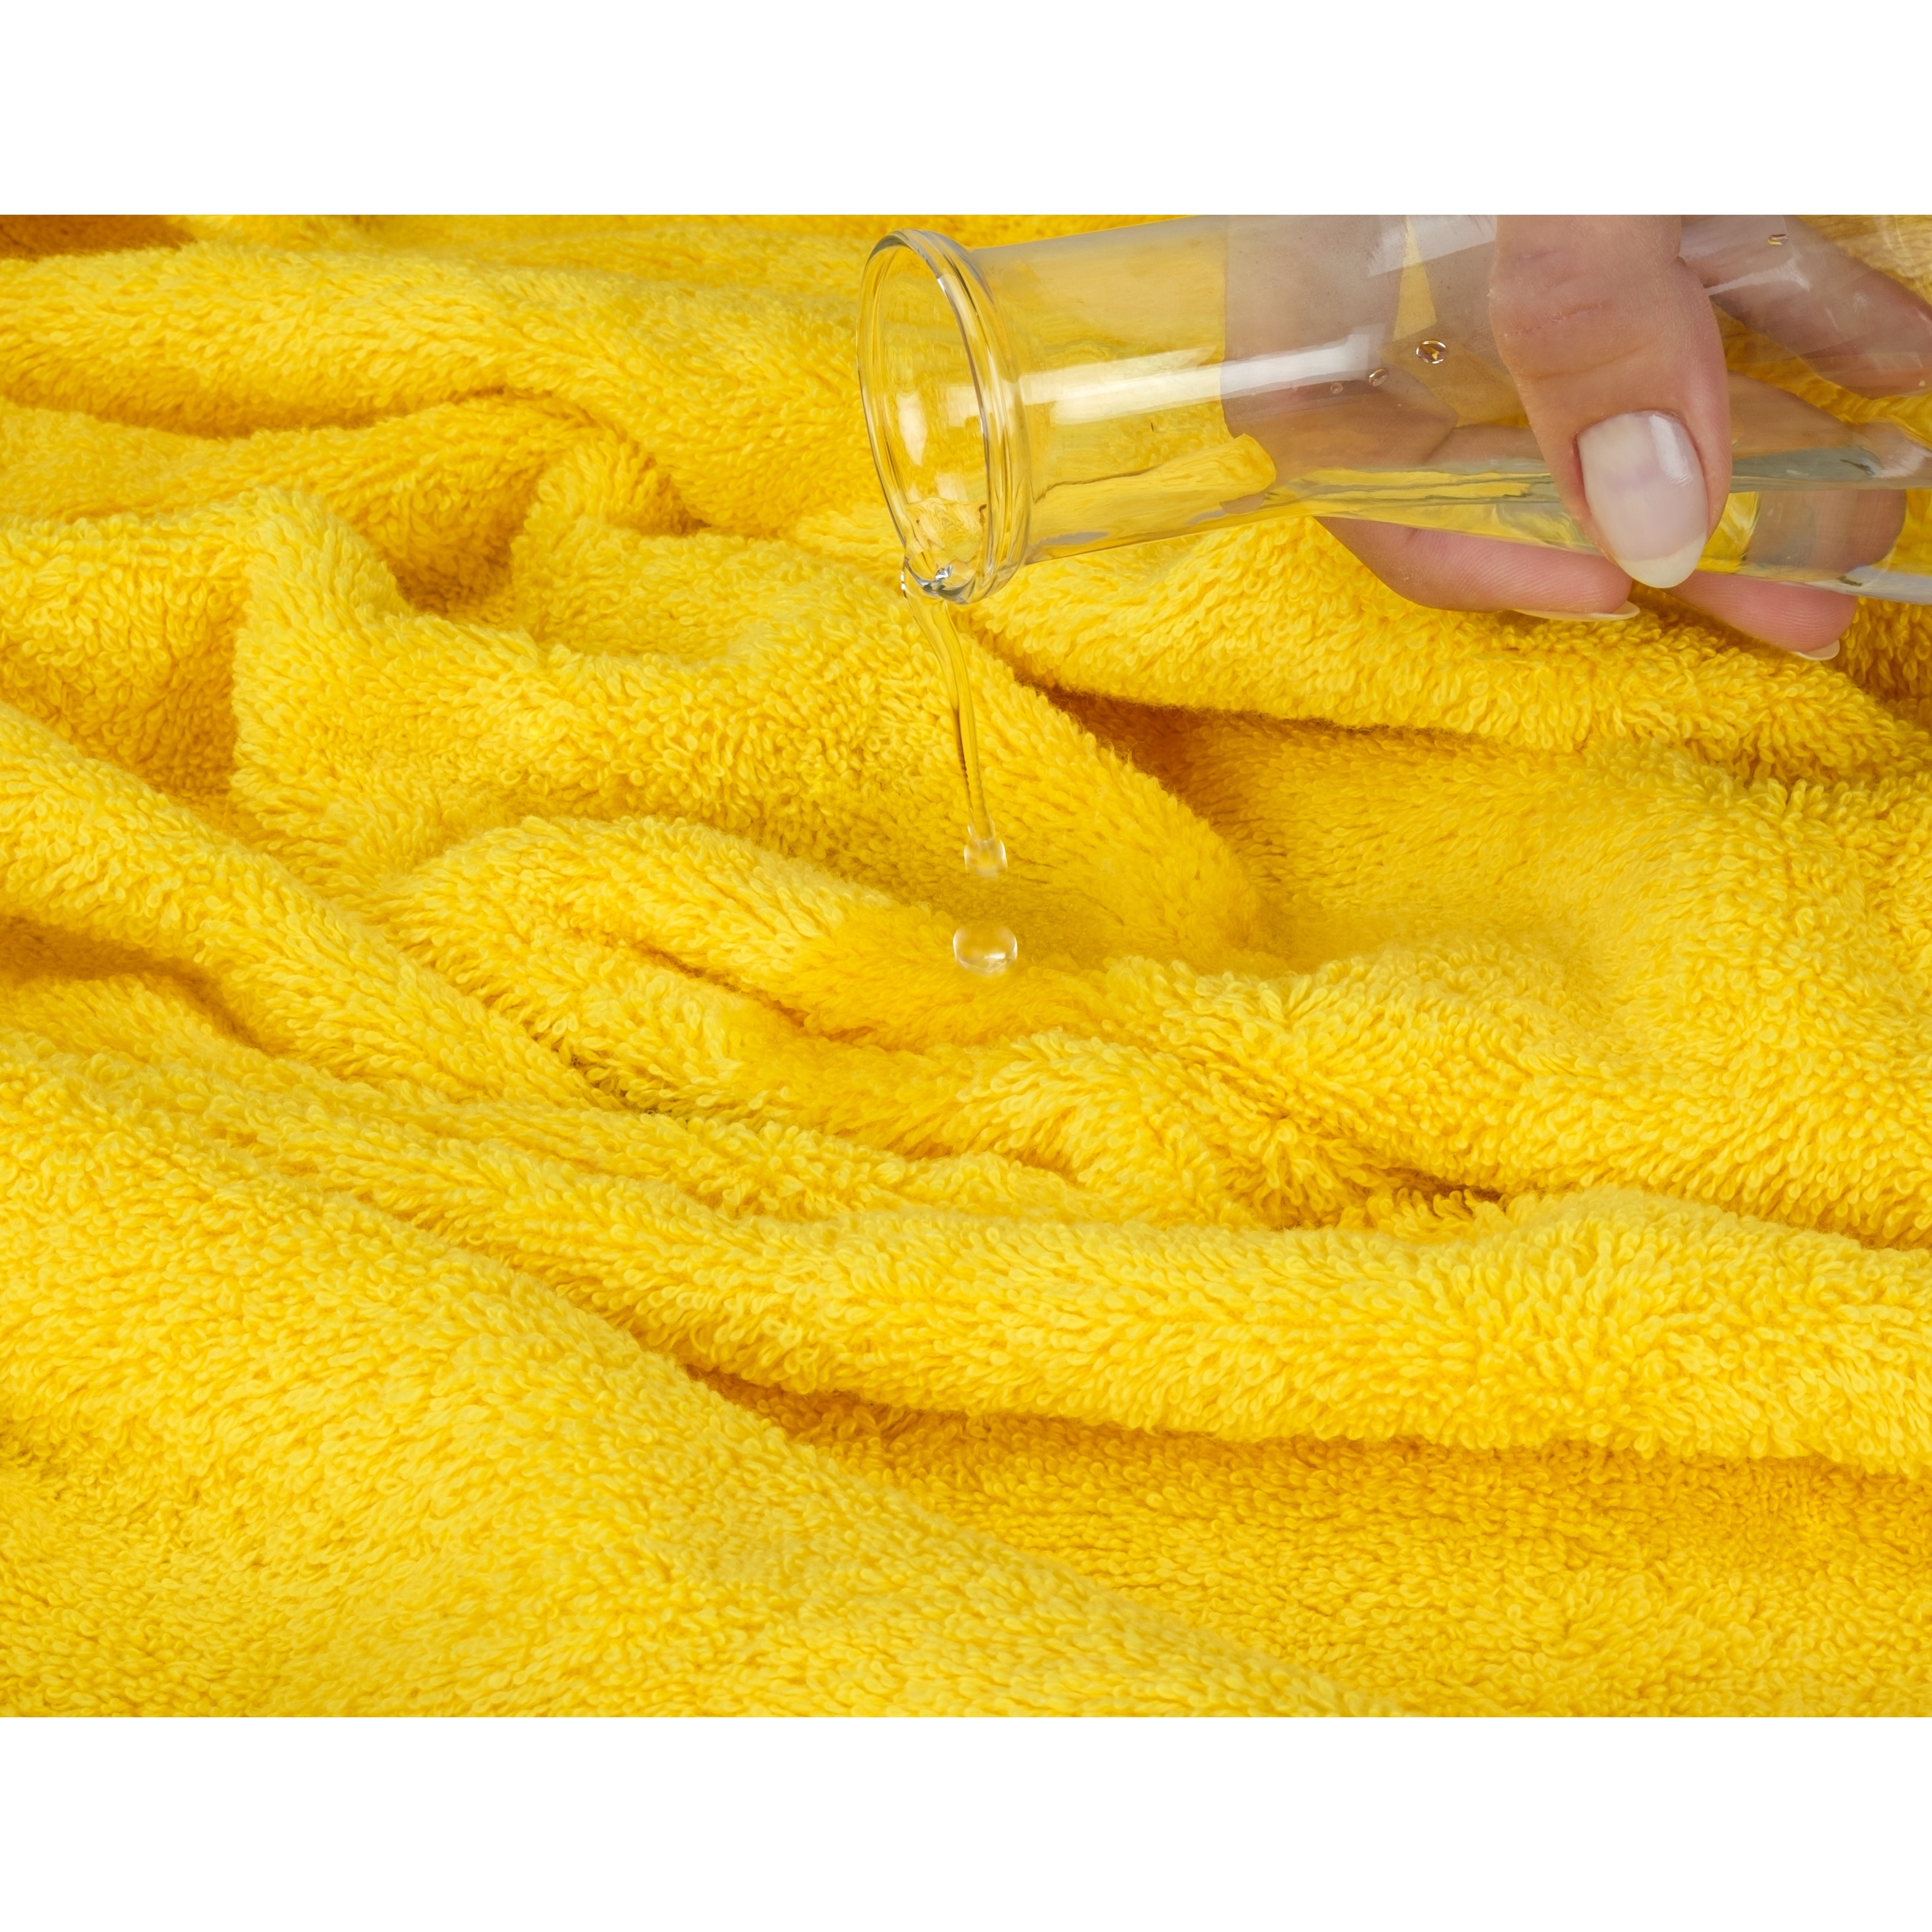 https://ak1.ostkcdn.com/images/products/is/images/direct/57216310075cacdd89792f576b7d516b2c7169bb/American-Soft-Linen-100%25-Genuine-Turkish-Cotton-Large-Jumbo-Bath-Towel-35x70-Premium-%26-Luxury-Towels.jpg